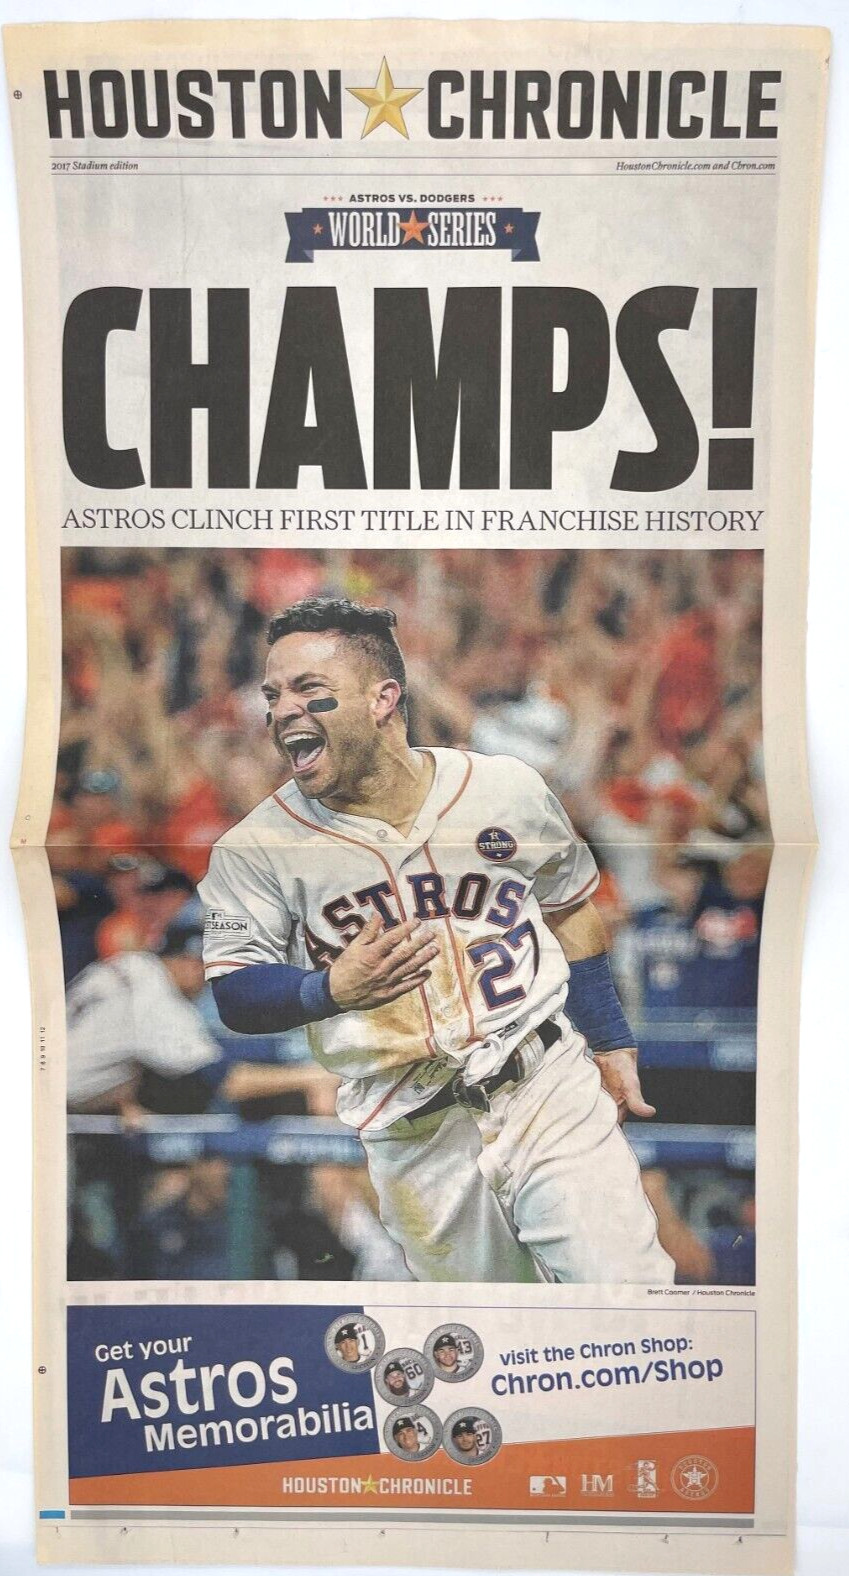 2017 World Series CHAMPS Houston Astros Houston Chronicle Stadium Edition.